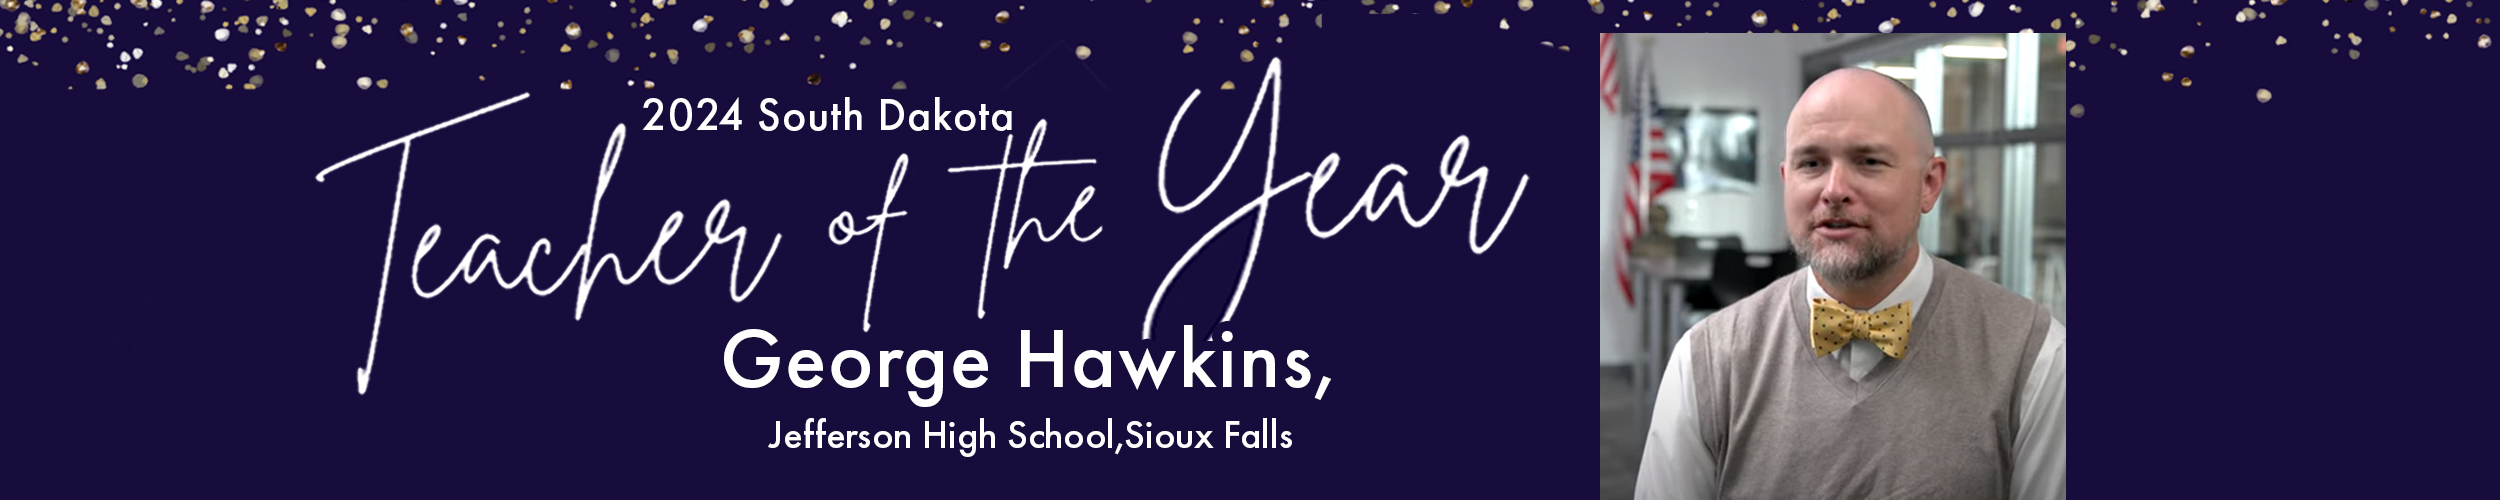 2024 South Dakota Teacher of the Year, George Hawkins, Jefferson High School, Sioux Falls.  Link.